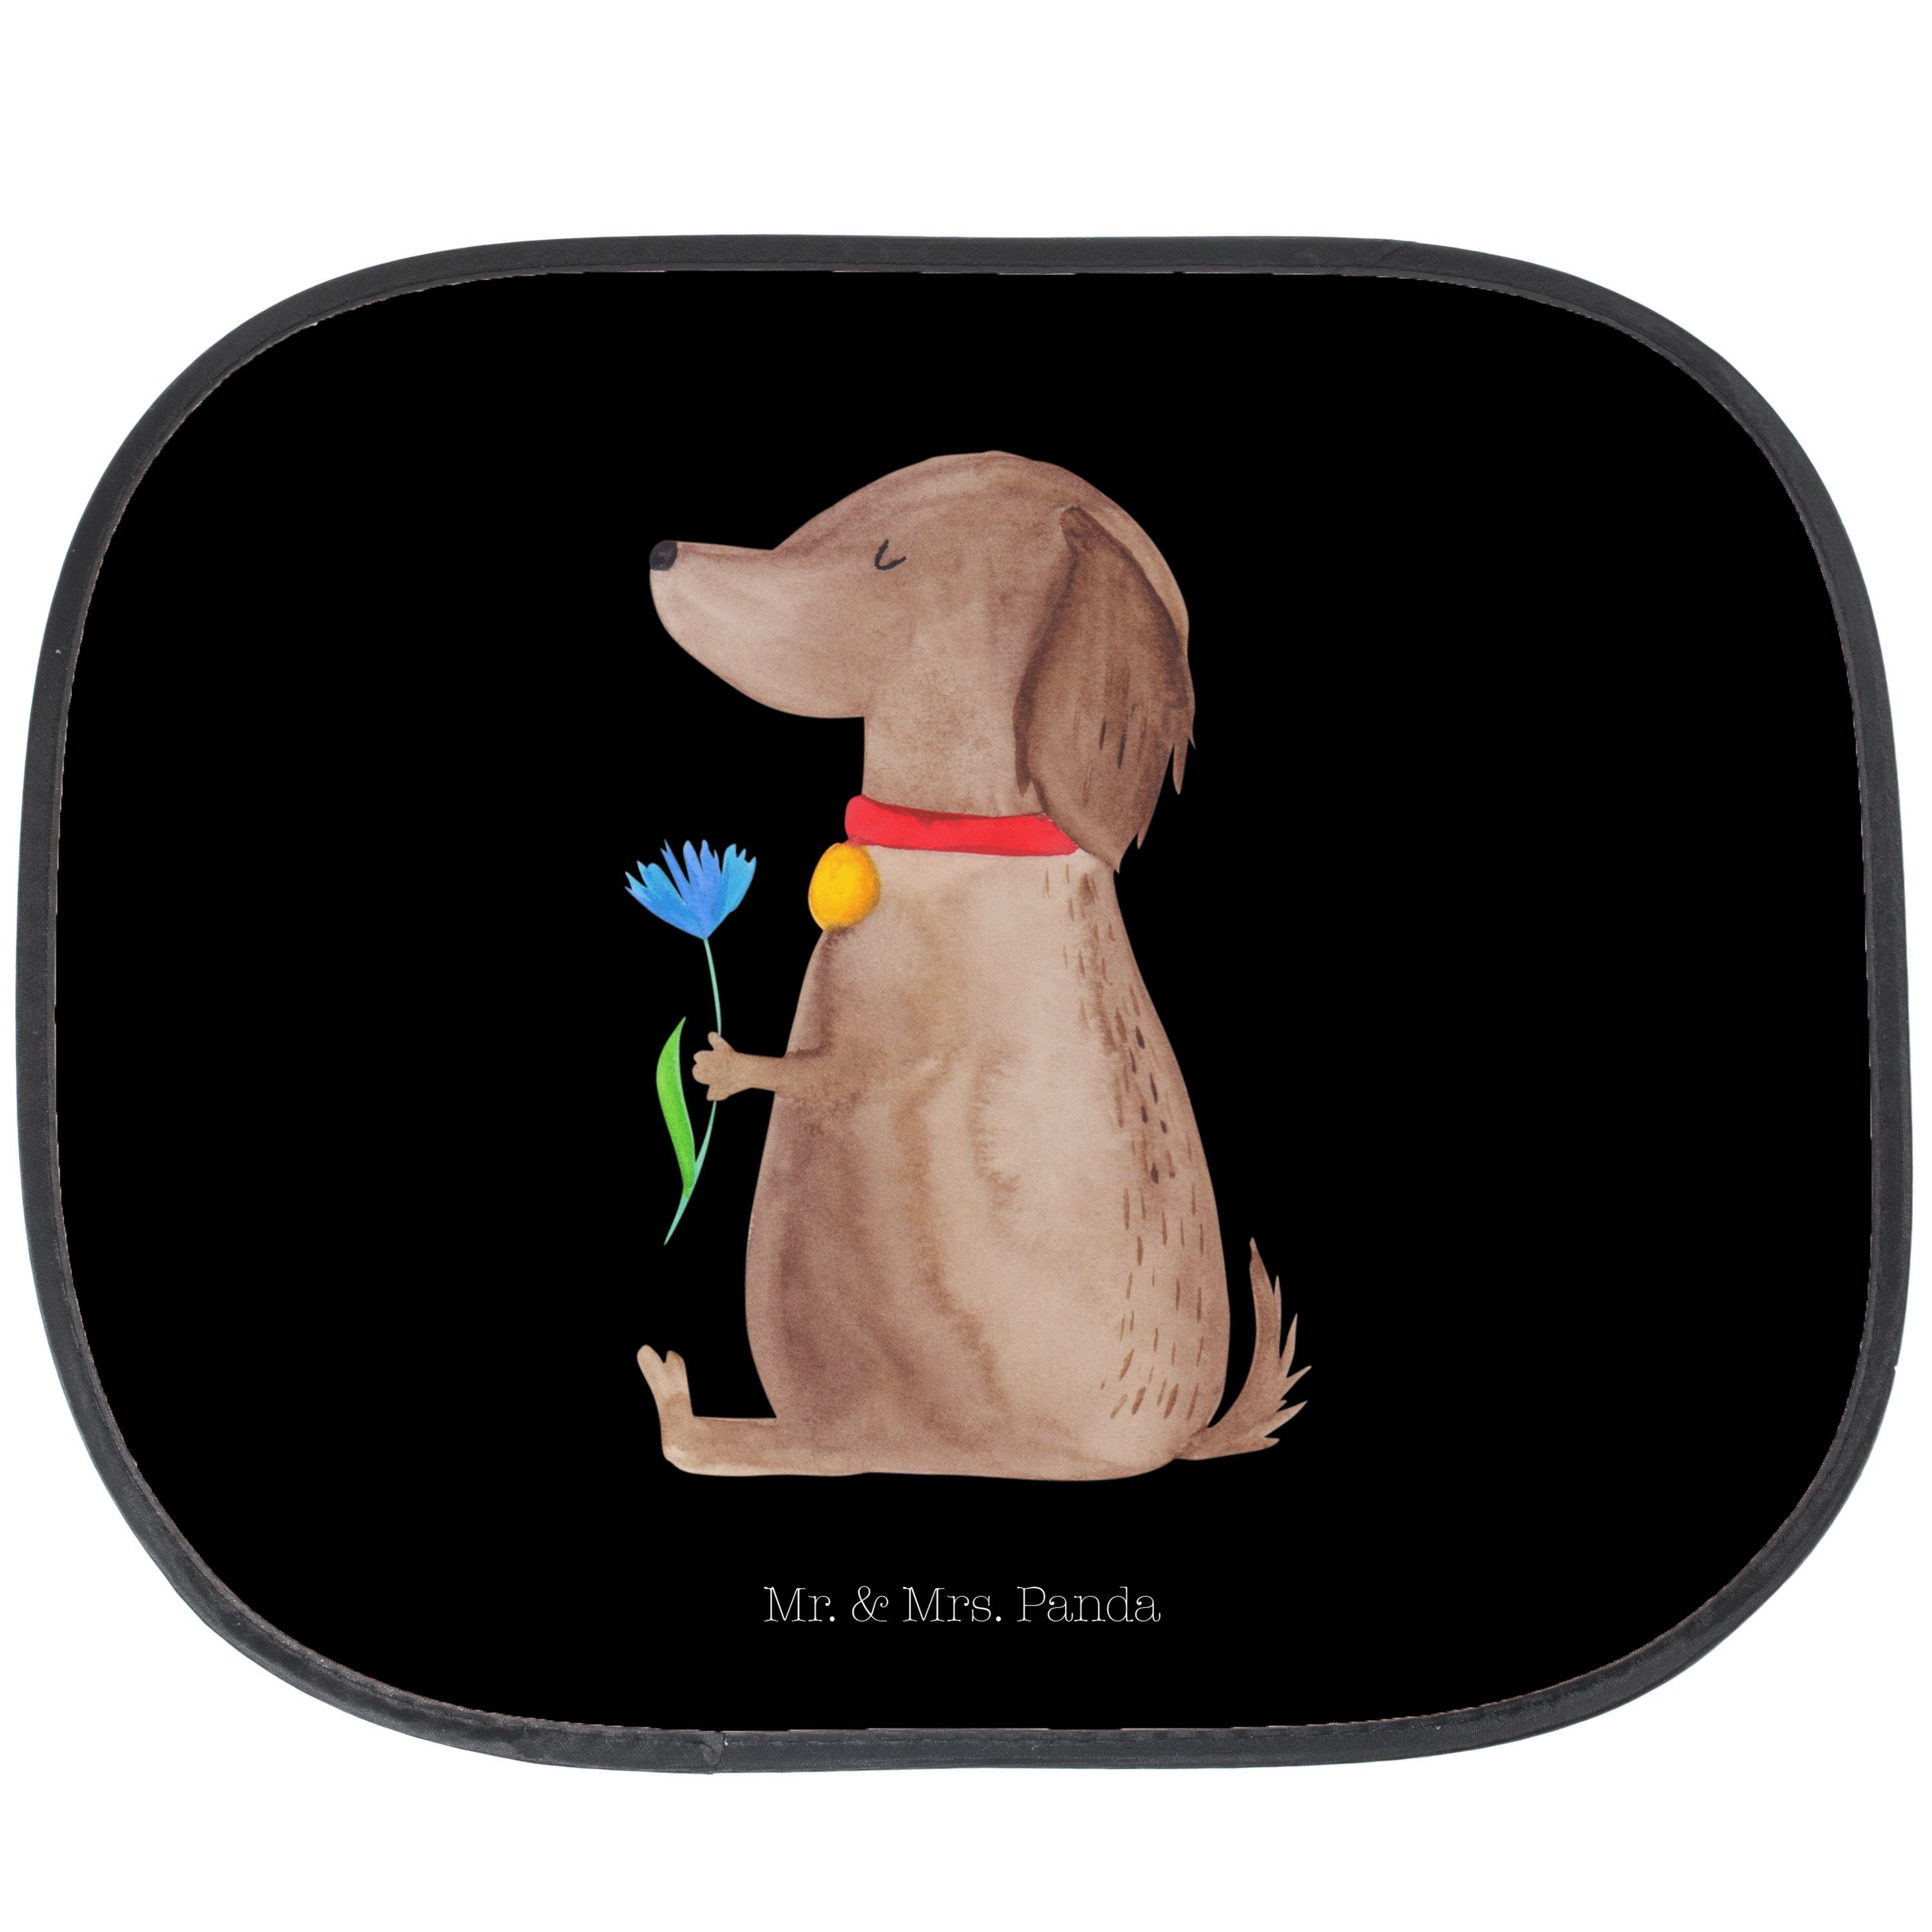 Sonnenschutz Hund Blume - Schwarz Frauchen, Geschenk, Hunde, - Mr. & Mrs. Panda, Hunde, Sonnenblende, Seidenmatt